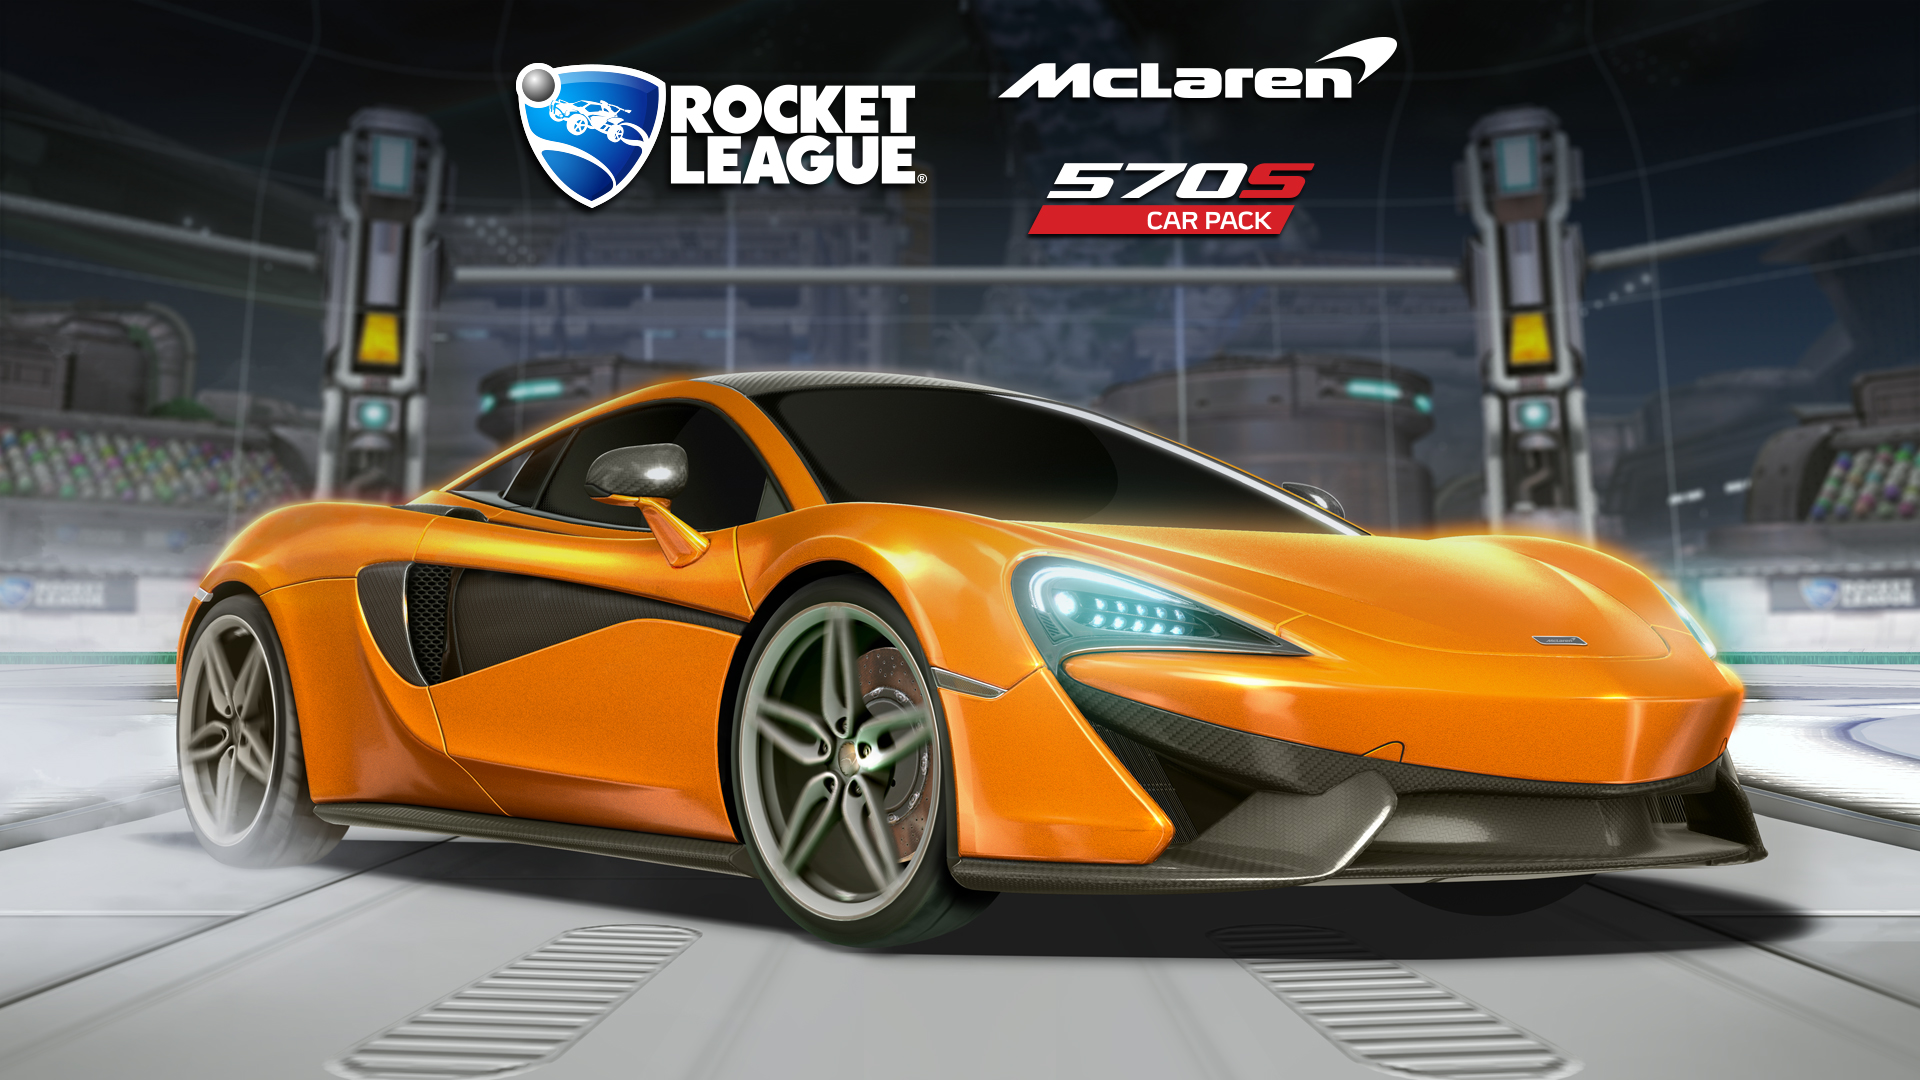 Rocket League® - McLaren 570S Car Pack